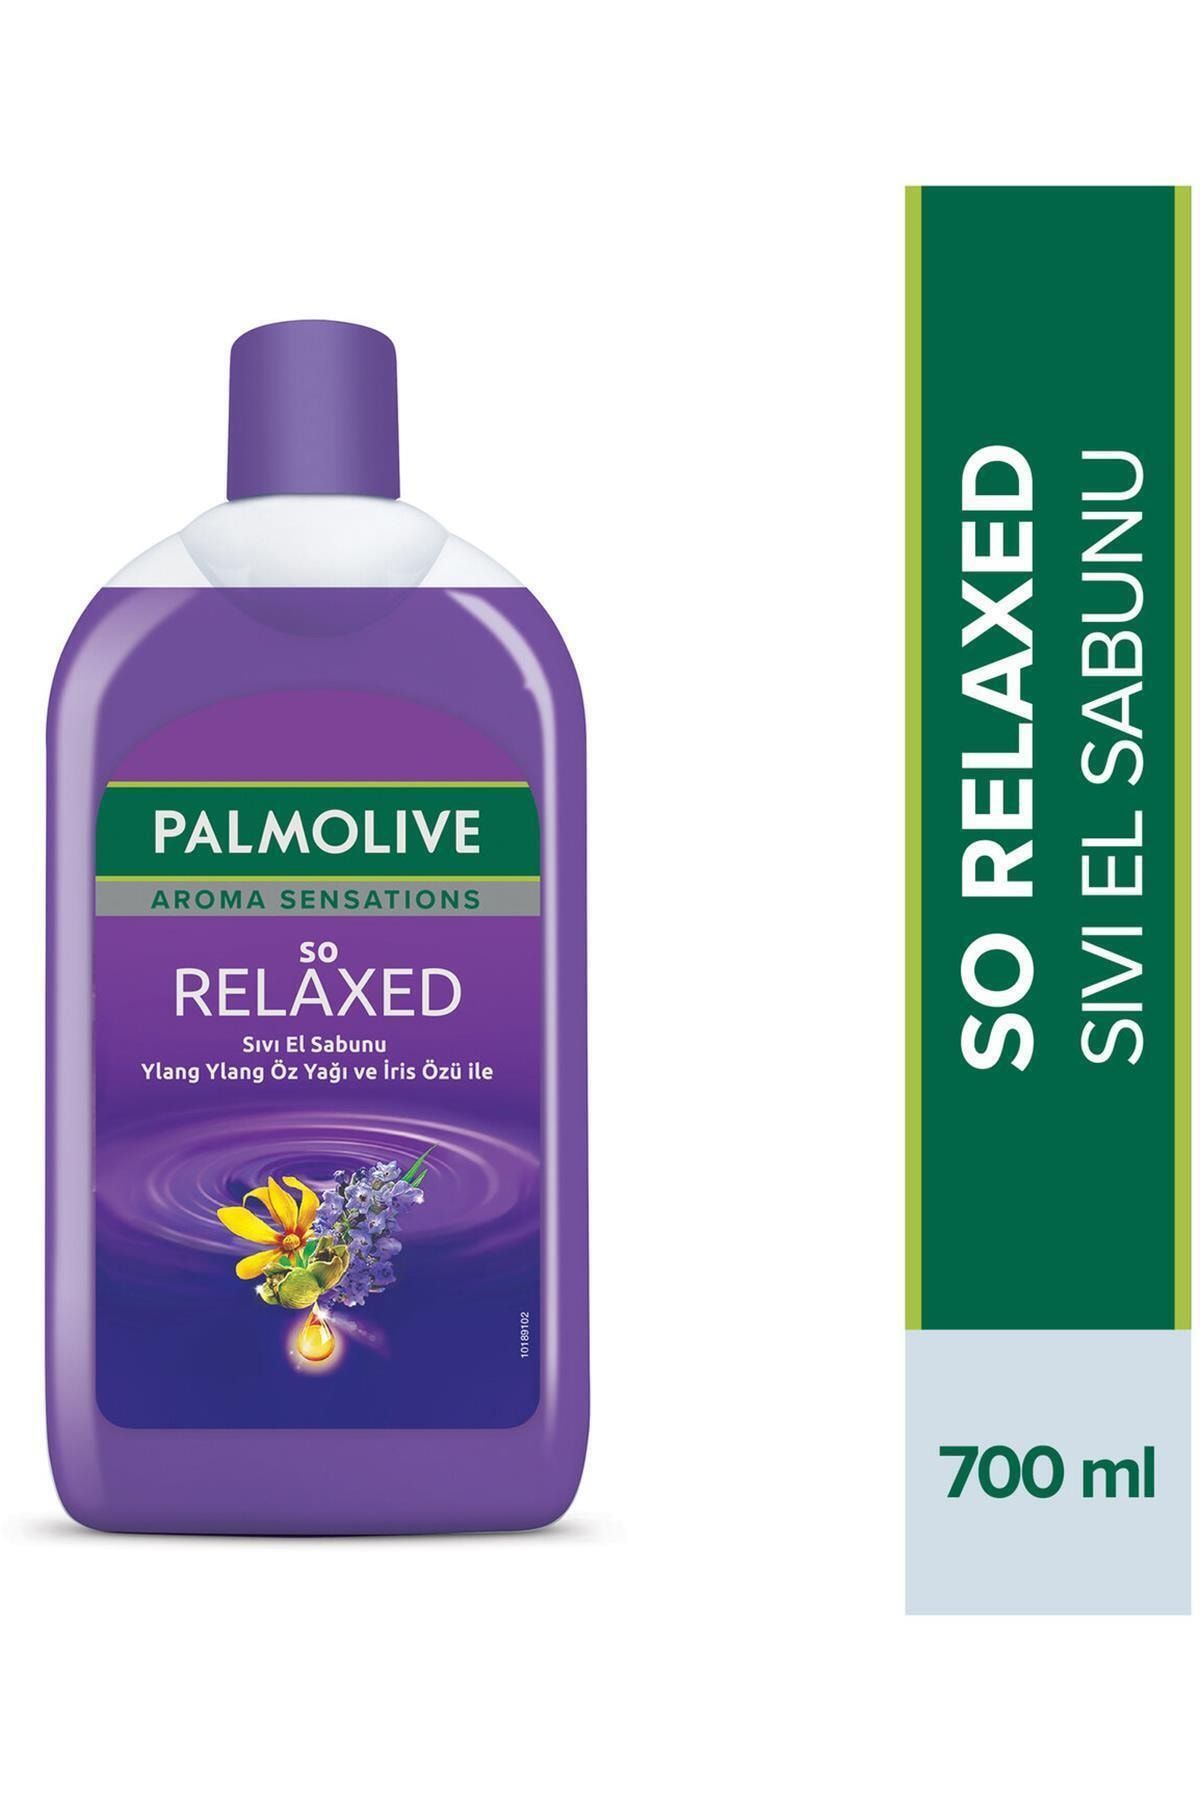 Palmolive Marka: Aroma Sensations So Relaxed Ylang Ylang Öz Yağı Ve Iris Özü Ile Sıvı El Sabunu 700